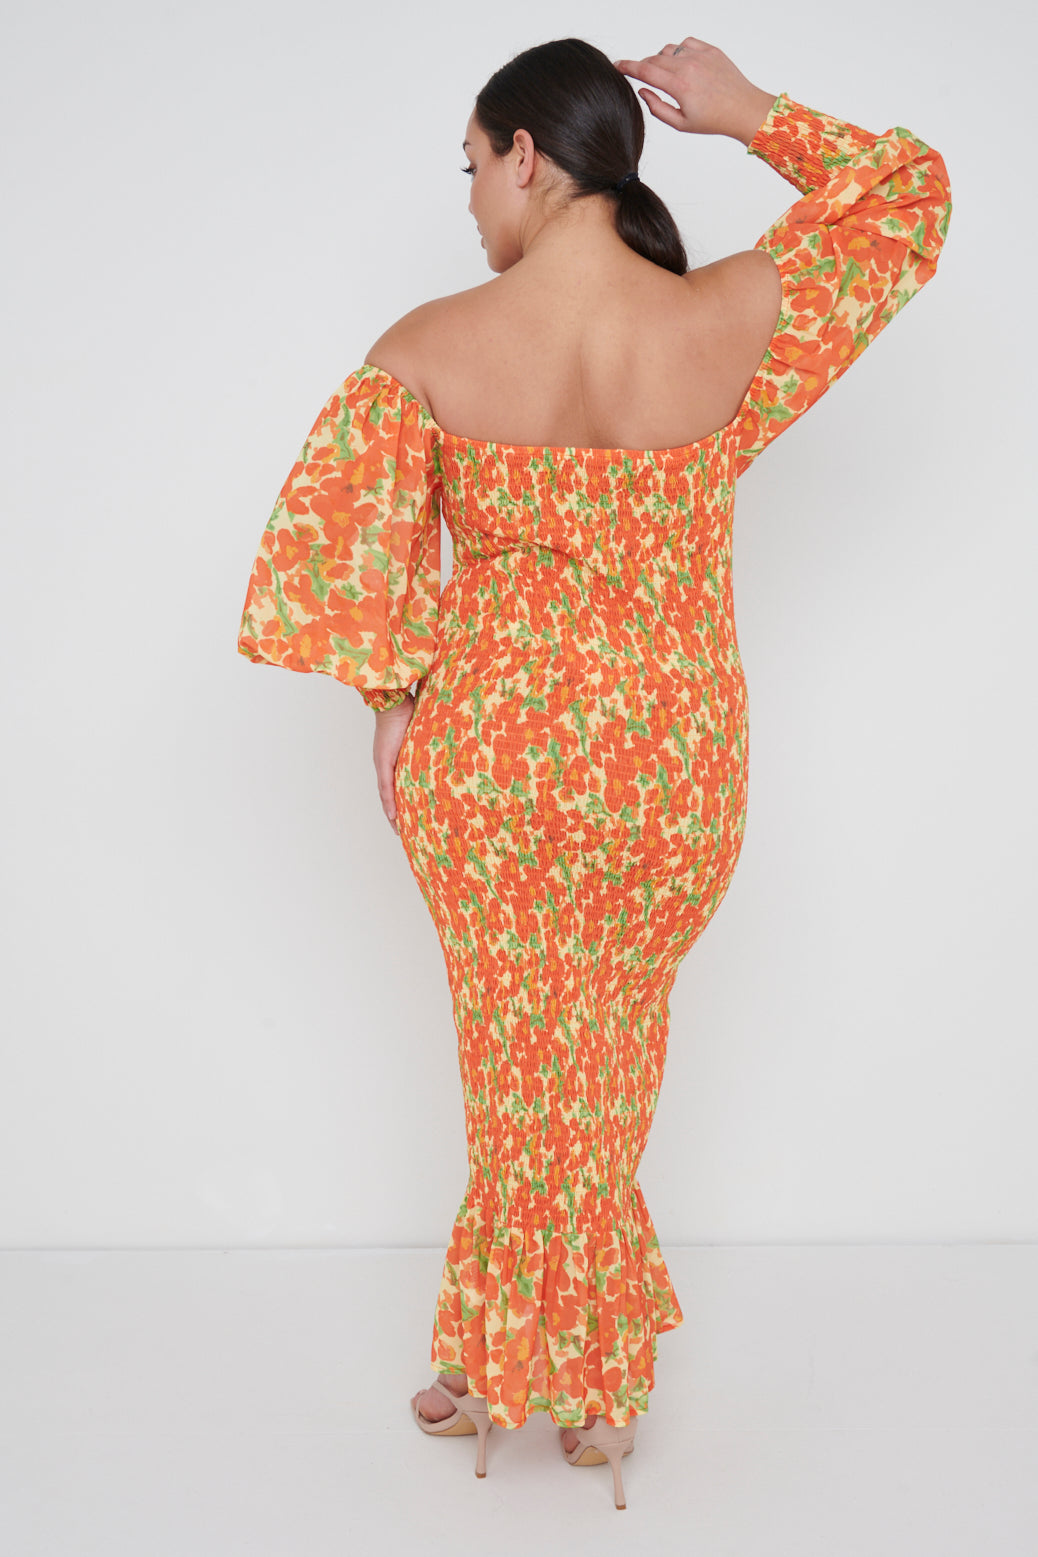 Leona Bardot Shirred Midaxi Dress Curve - Orange and Yellow Floral